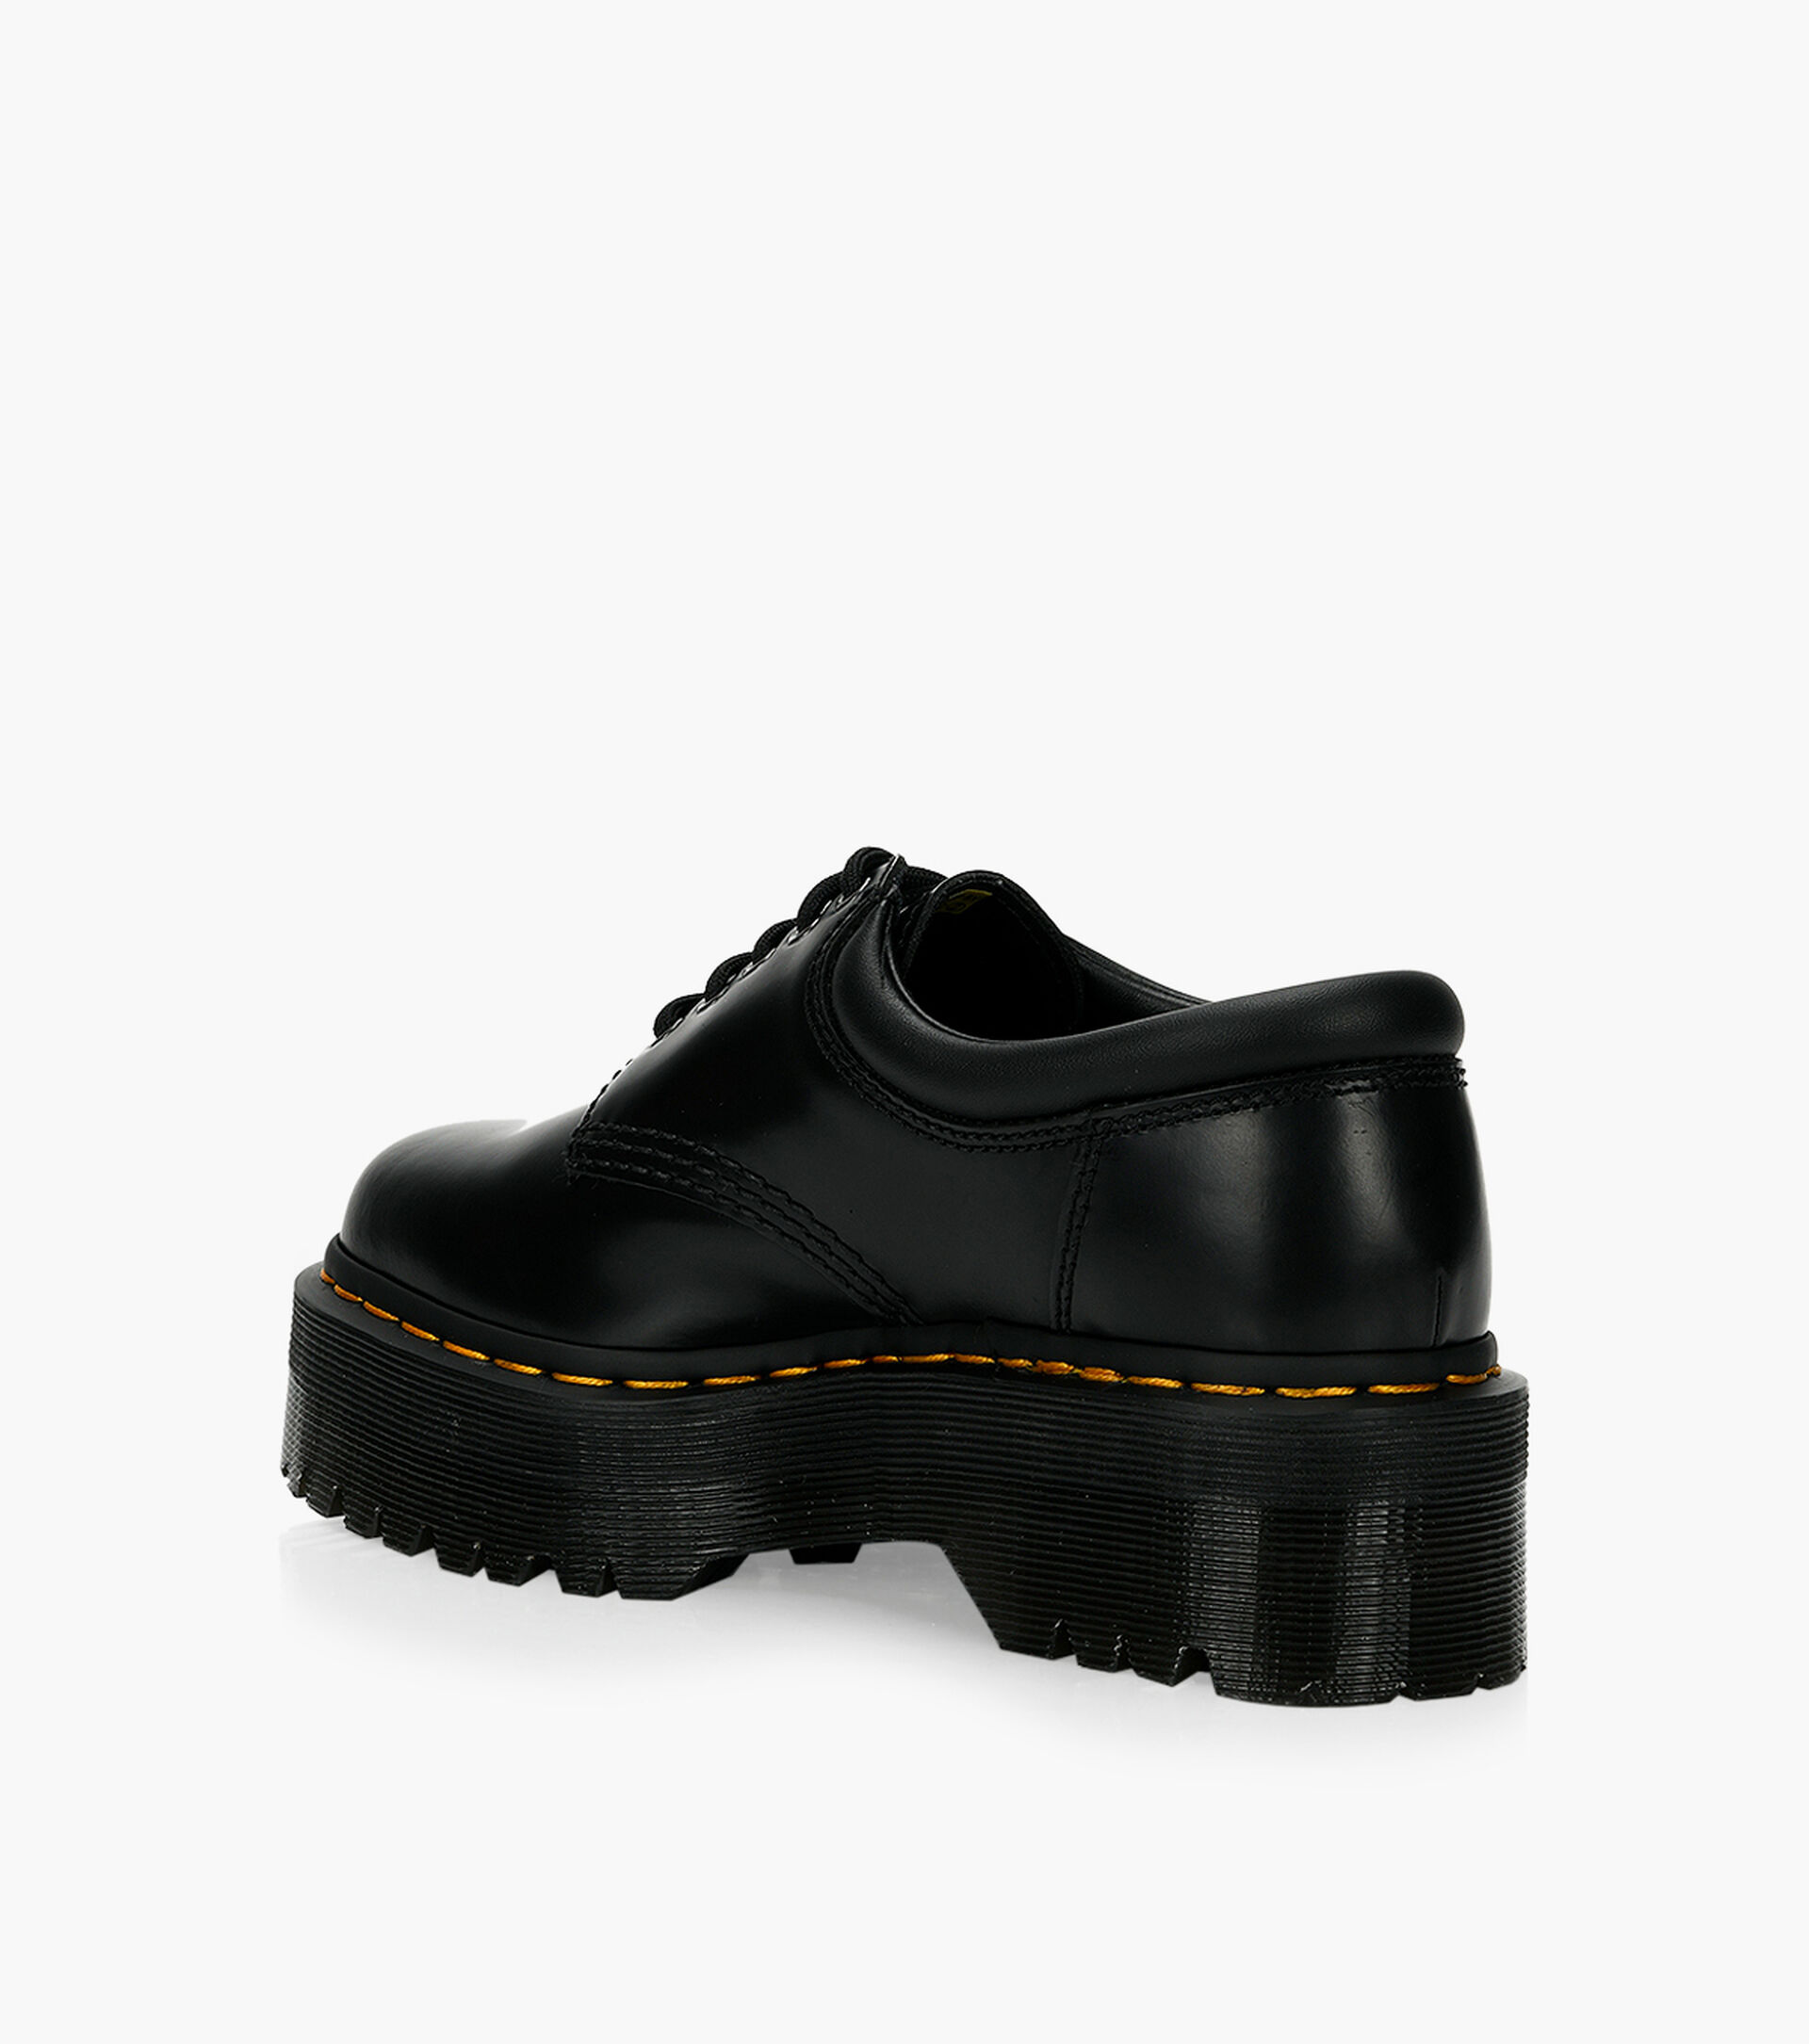 DR. MARTENS 8053 QUAD - Black Leather | Browns Shoes